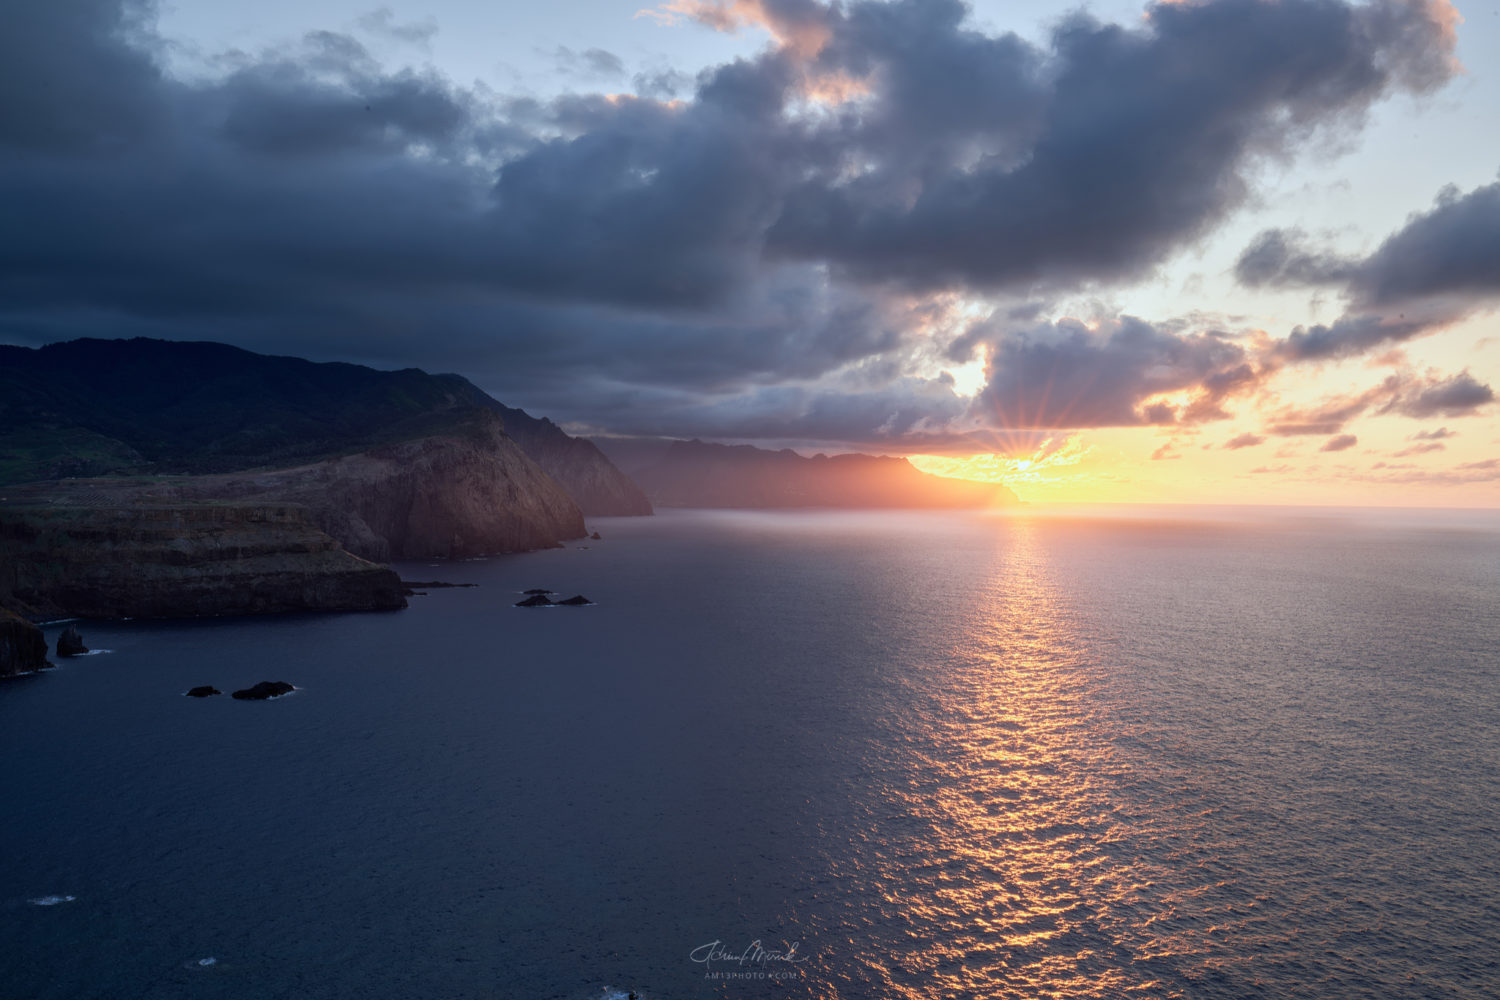 Northern tip of Madeira island